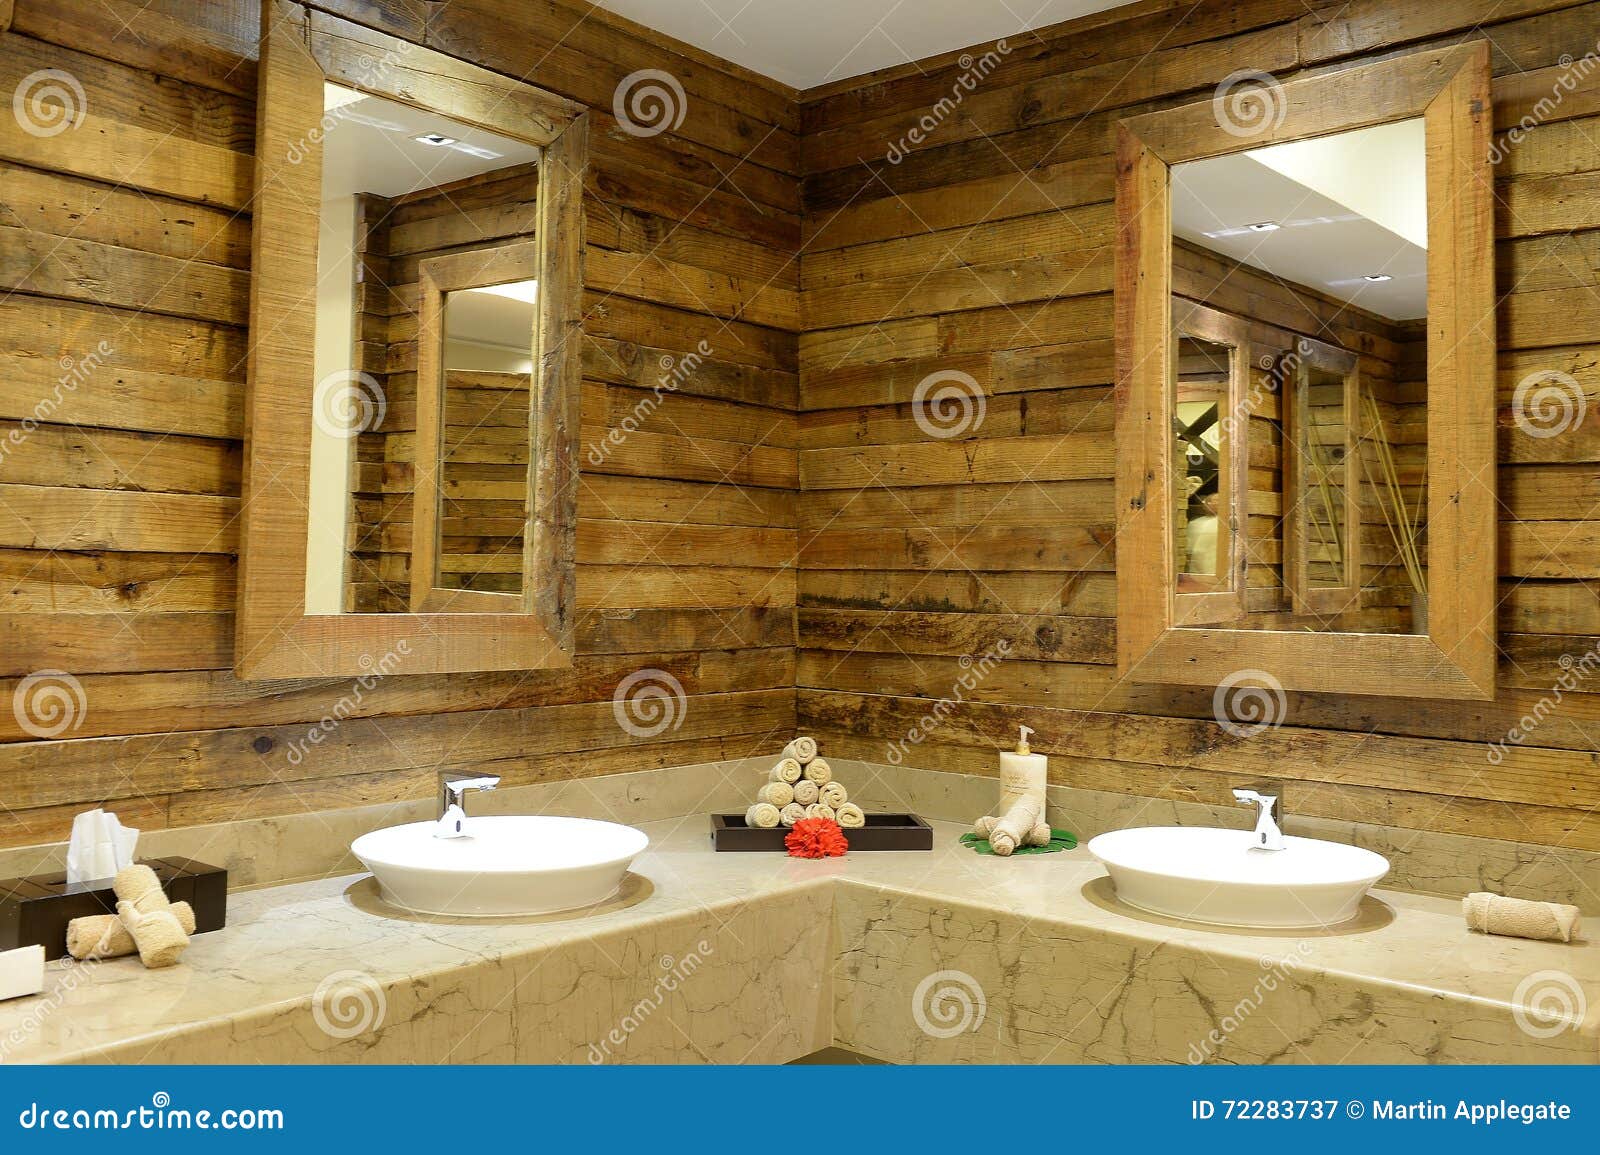 Rustic Bathroom Interior Stock Image Image Of Washroom